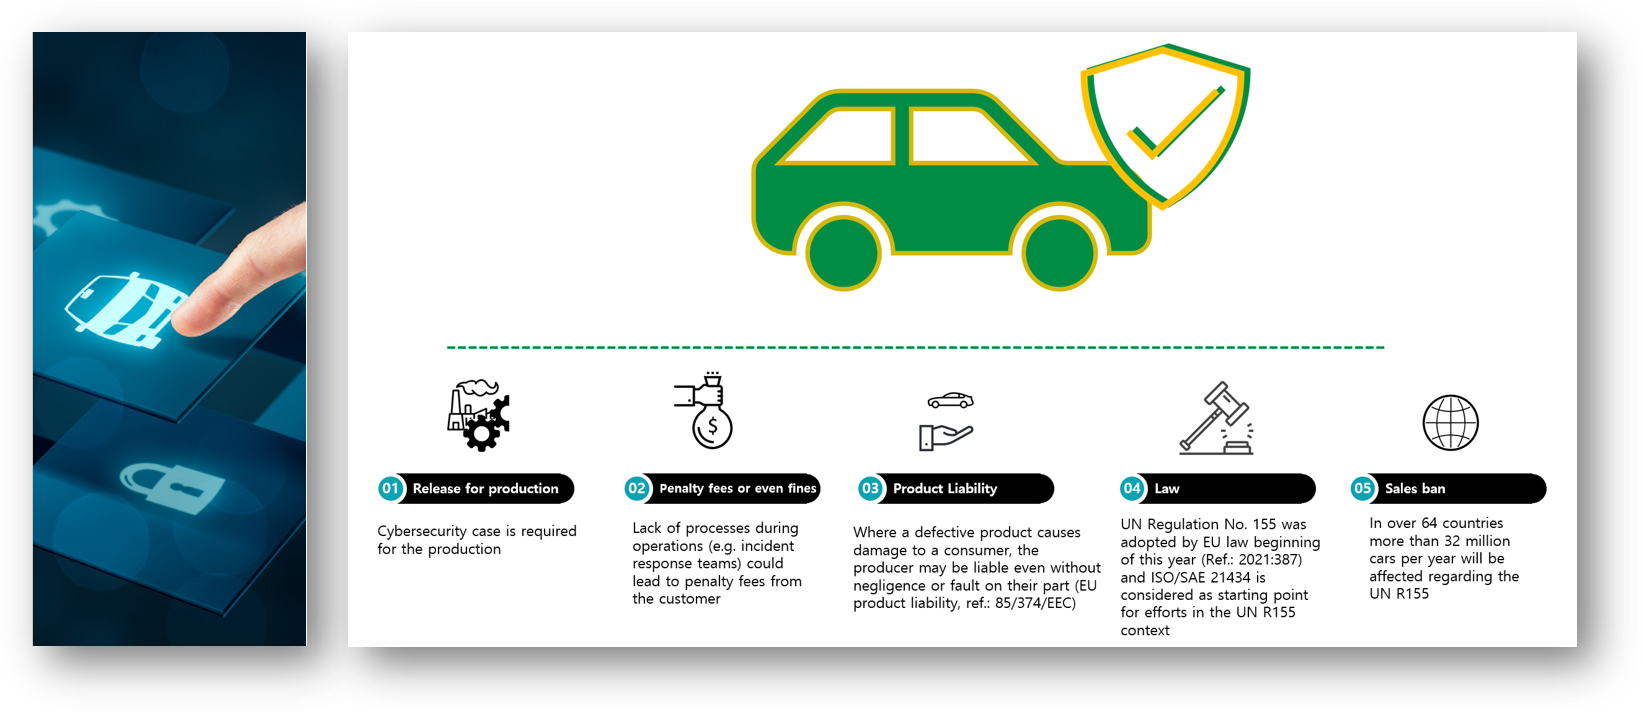 Connected Carから増加する自動車の安全の危険(Vehicle Security Threats)に対応します